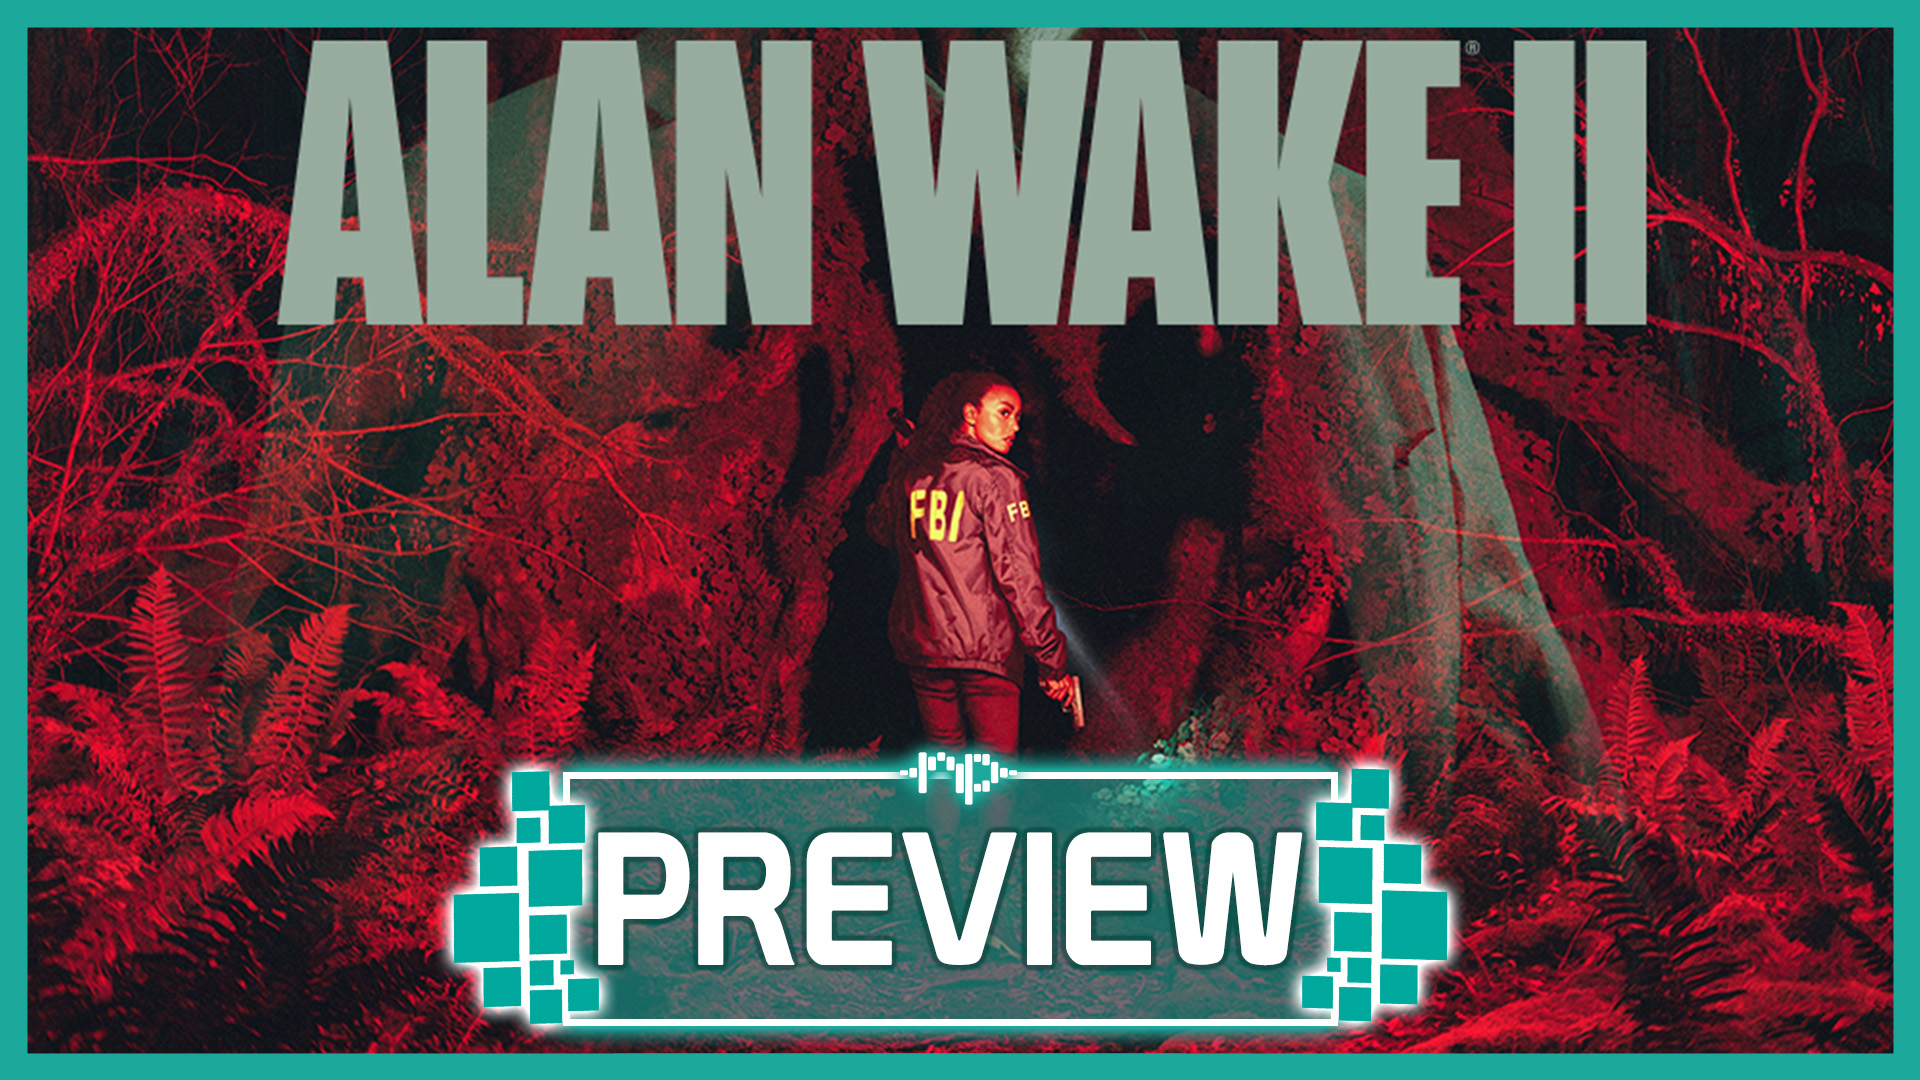 Alan Wake 2: The Final Preview